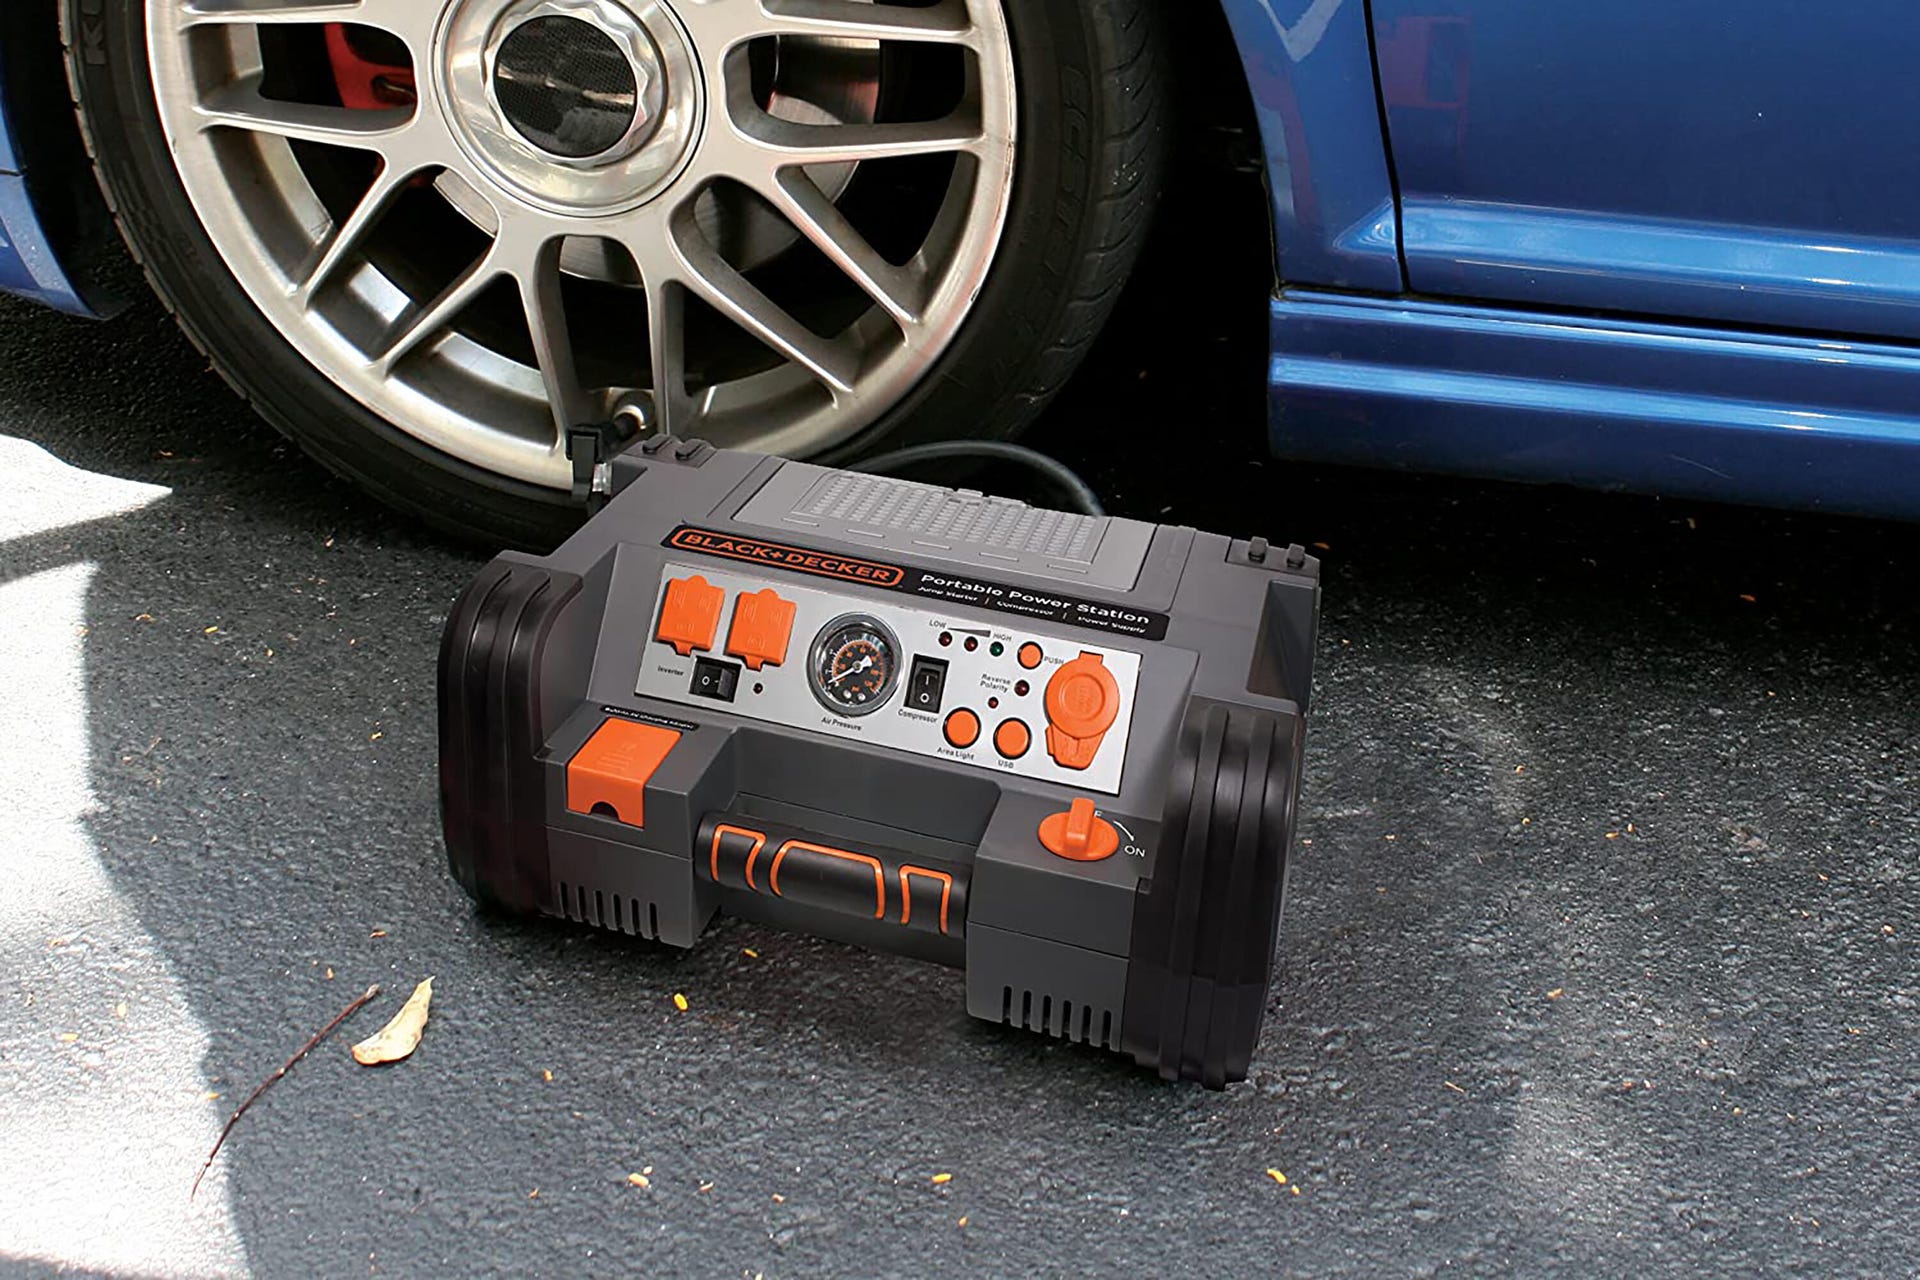 An orange, black and grey Black & Decker jump starter on the ground next to a car.